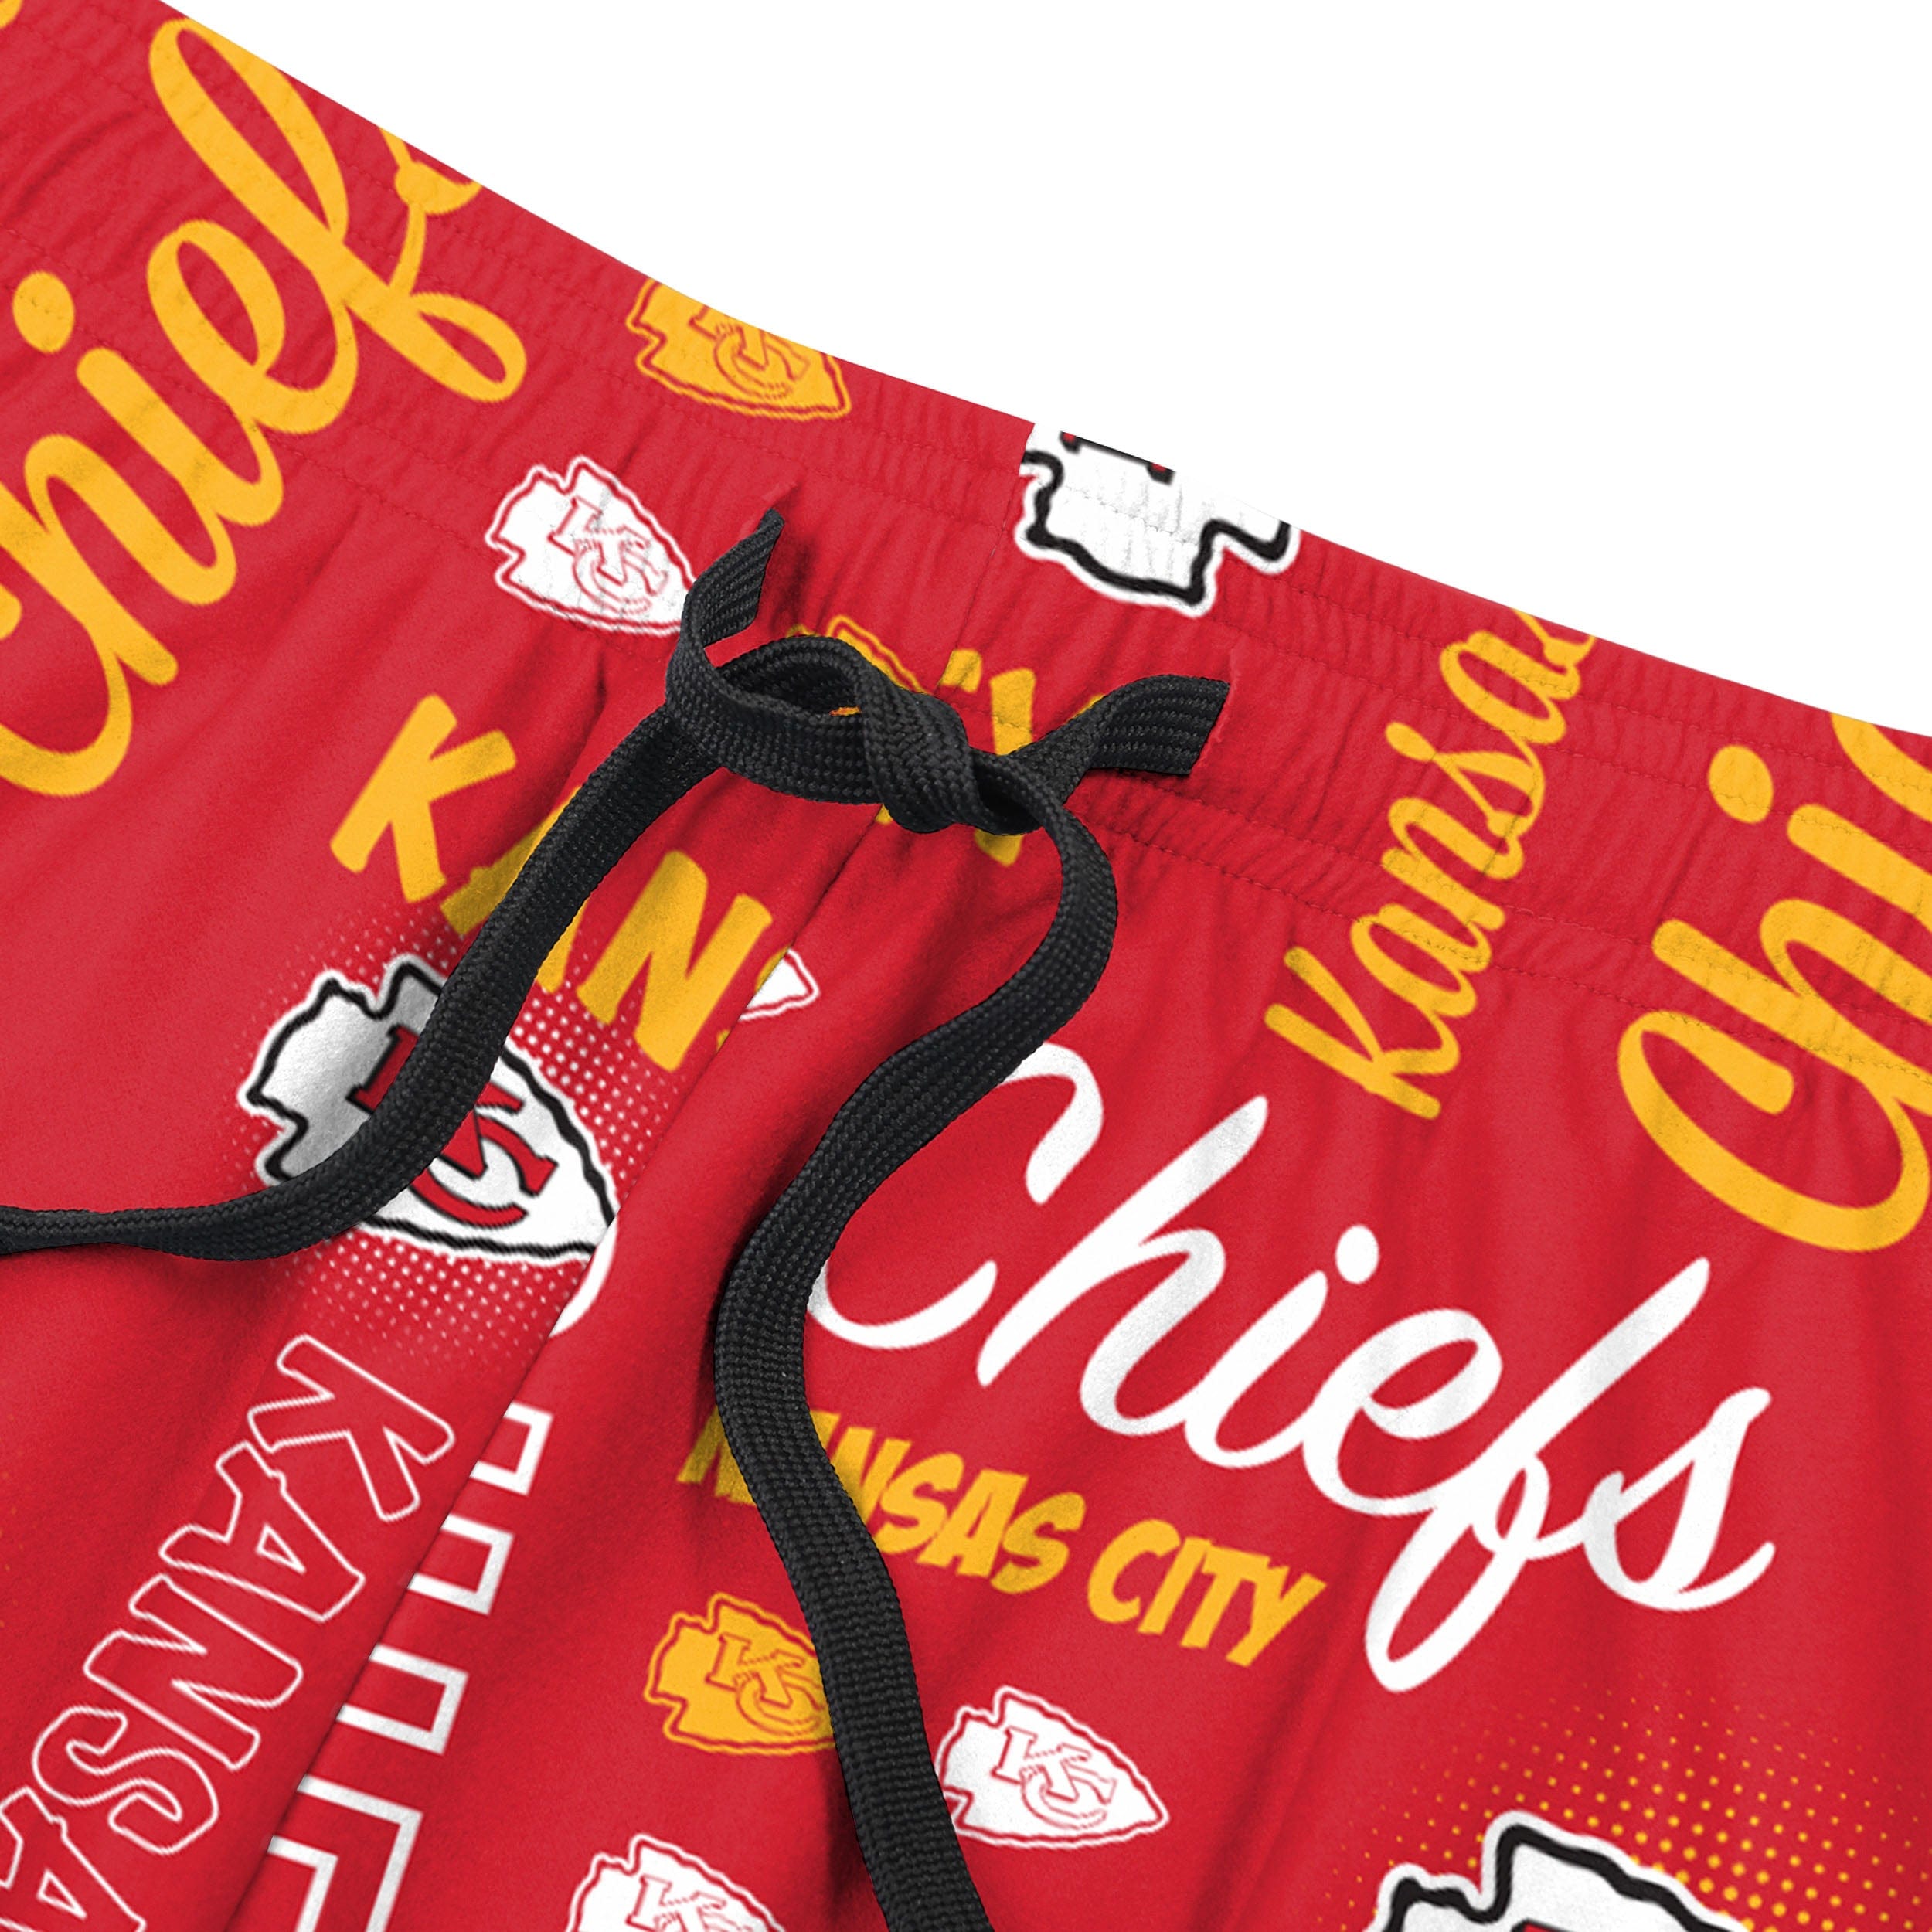 Kansas City Chiefs NFL Womens Mini Print Lounge Pants